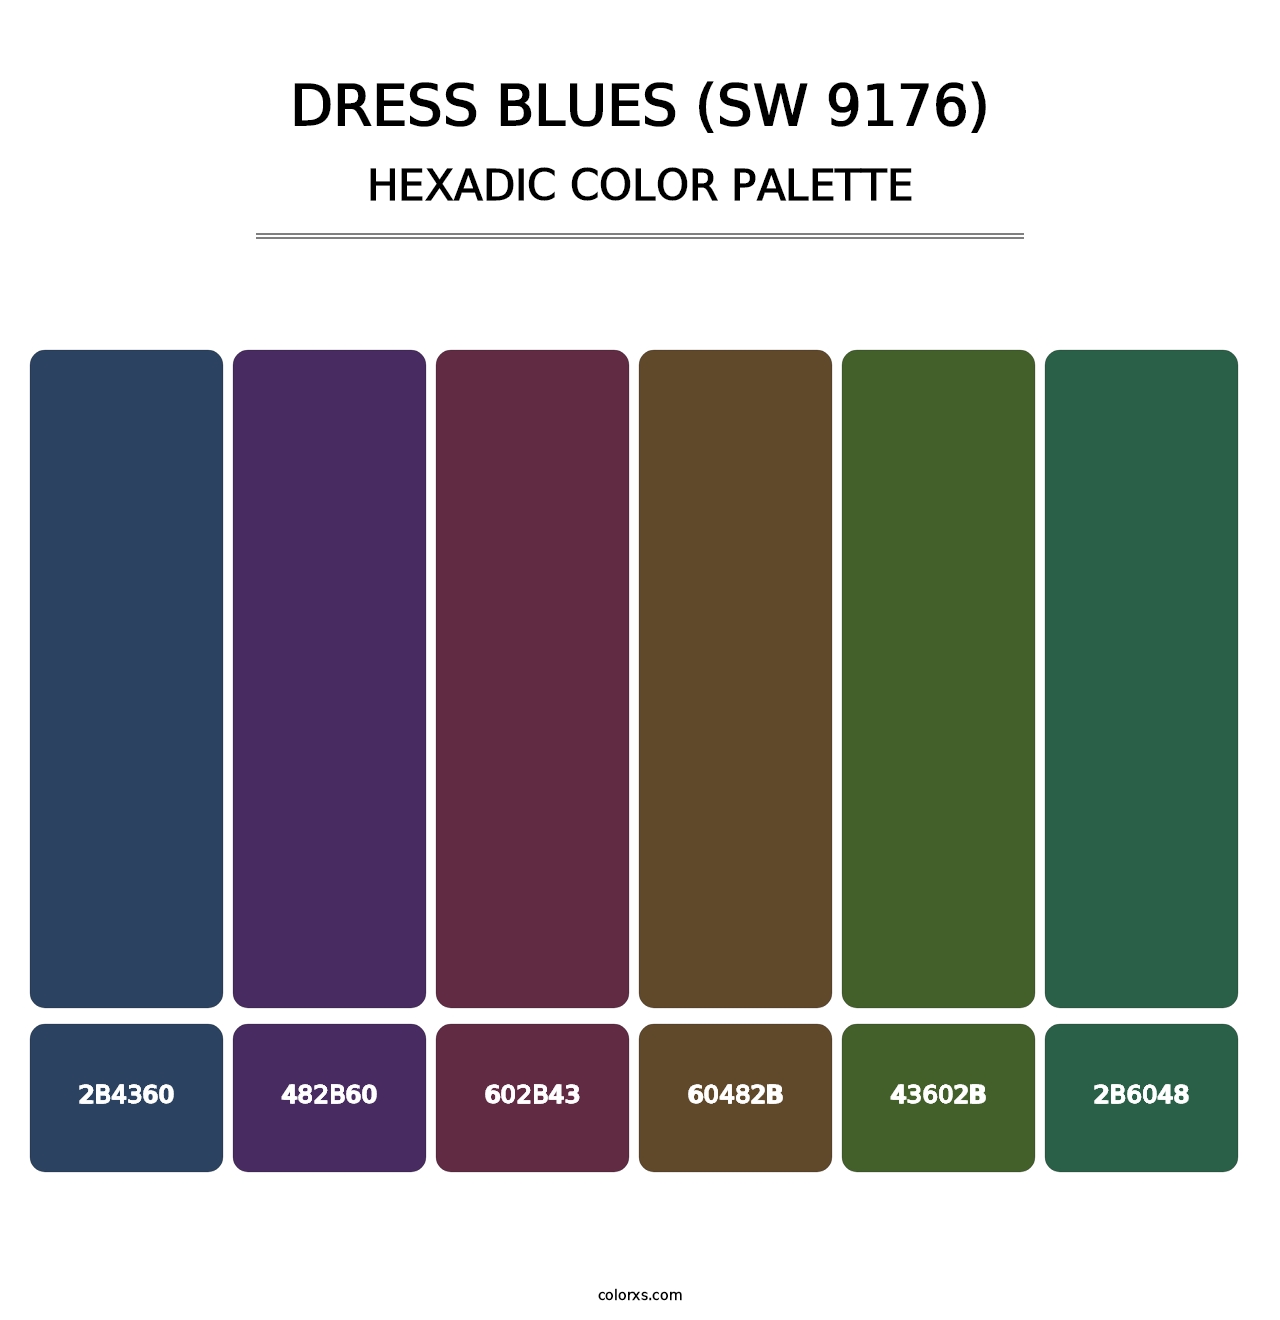 Dress Blues (SW 9176) - Hexadic Color Palette